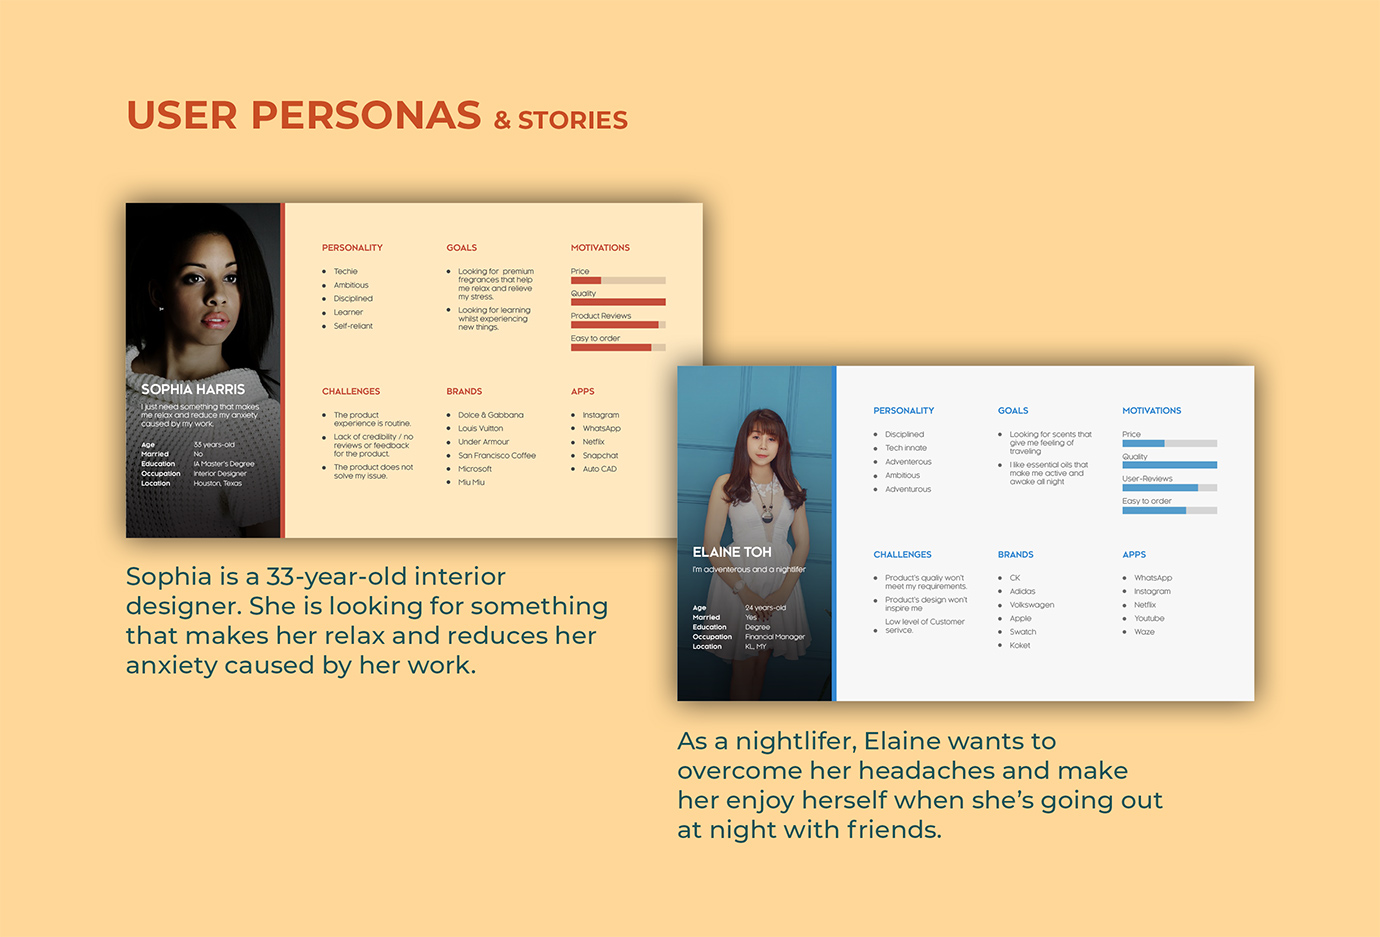 UX Design - Personas & User Stories